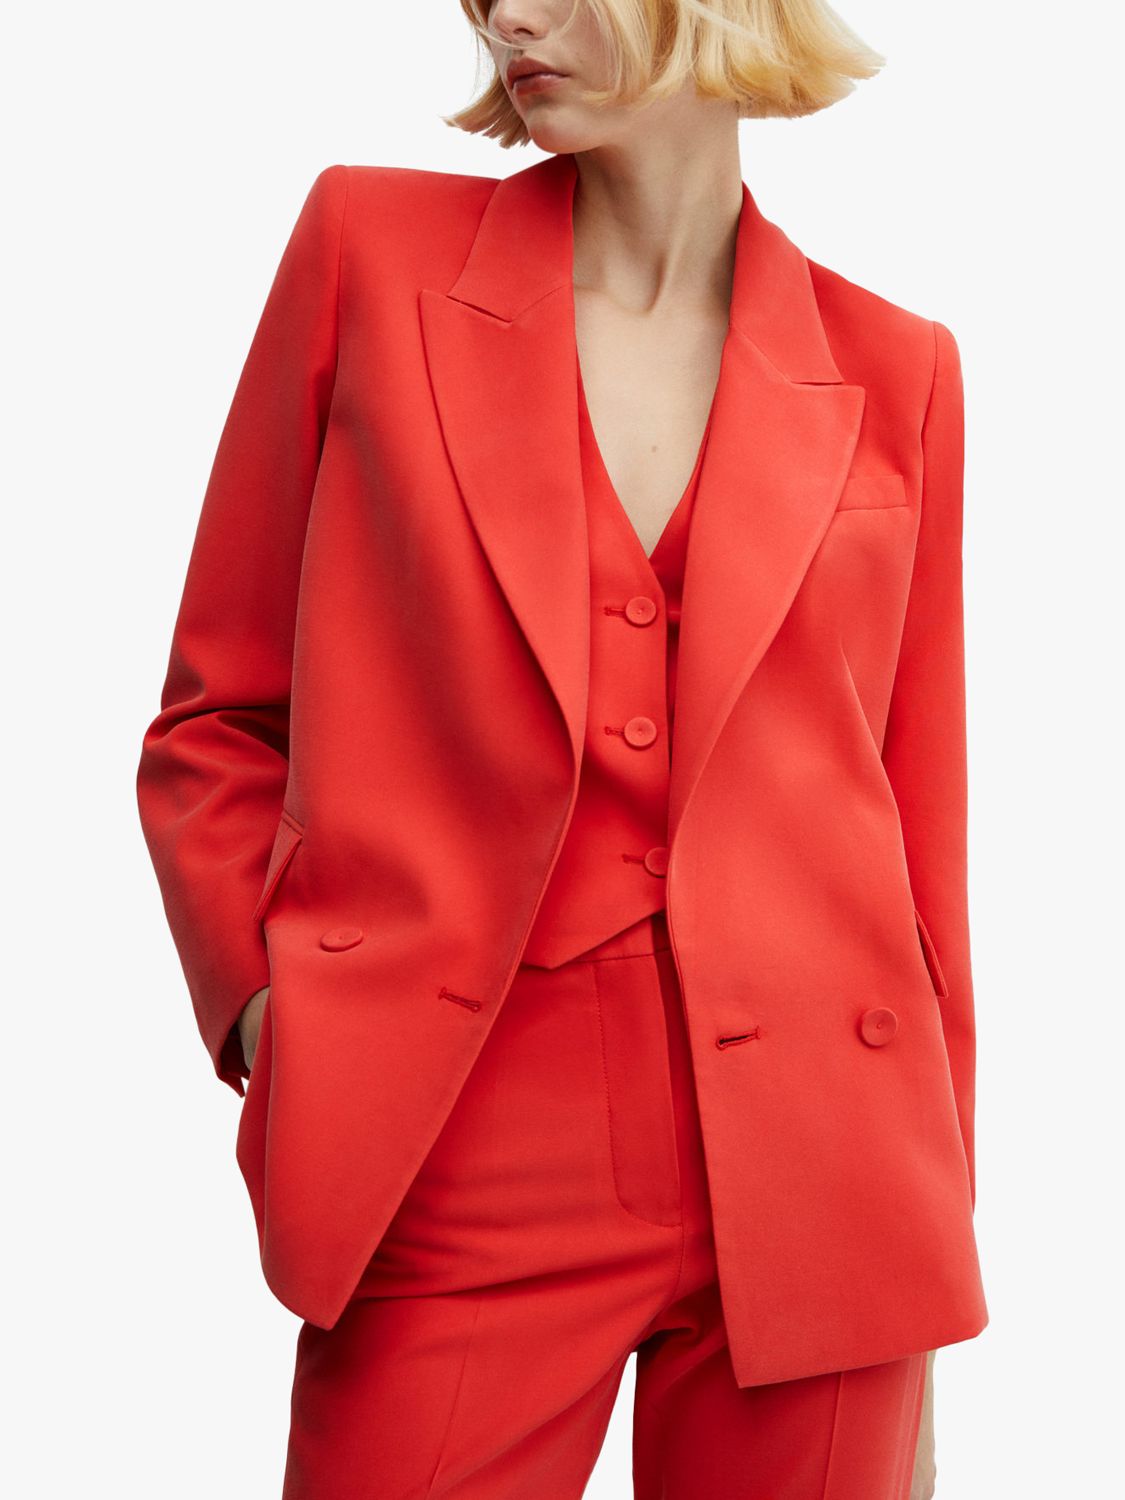 Mango Tempo Suit Waistcoat, Bright Red, L